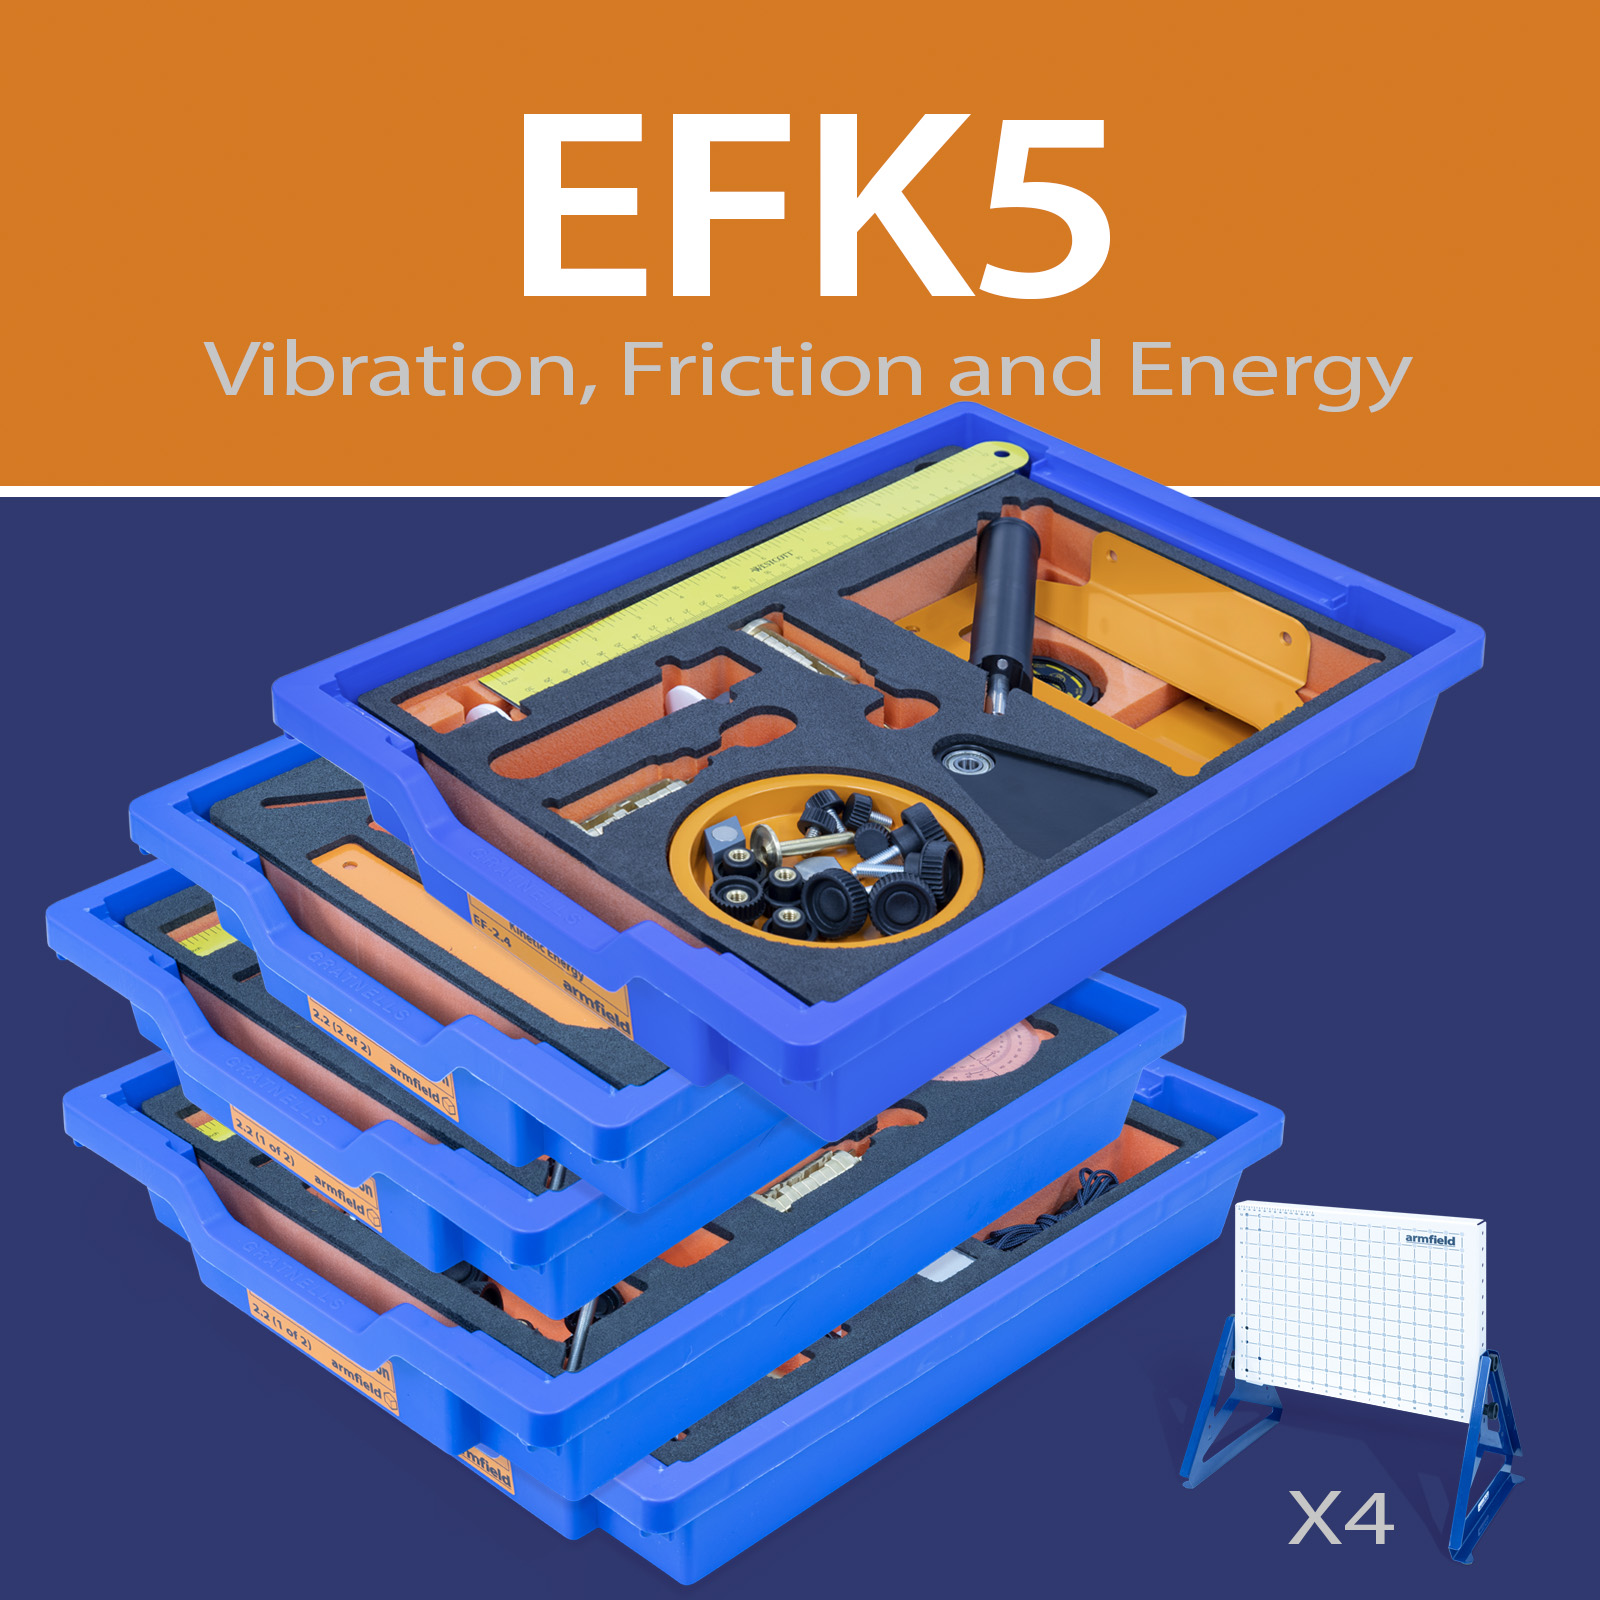 Vibration, Friction and Energy